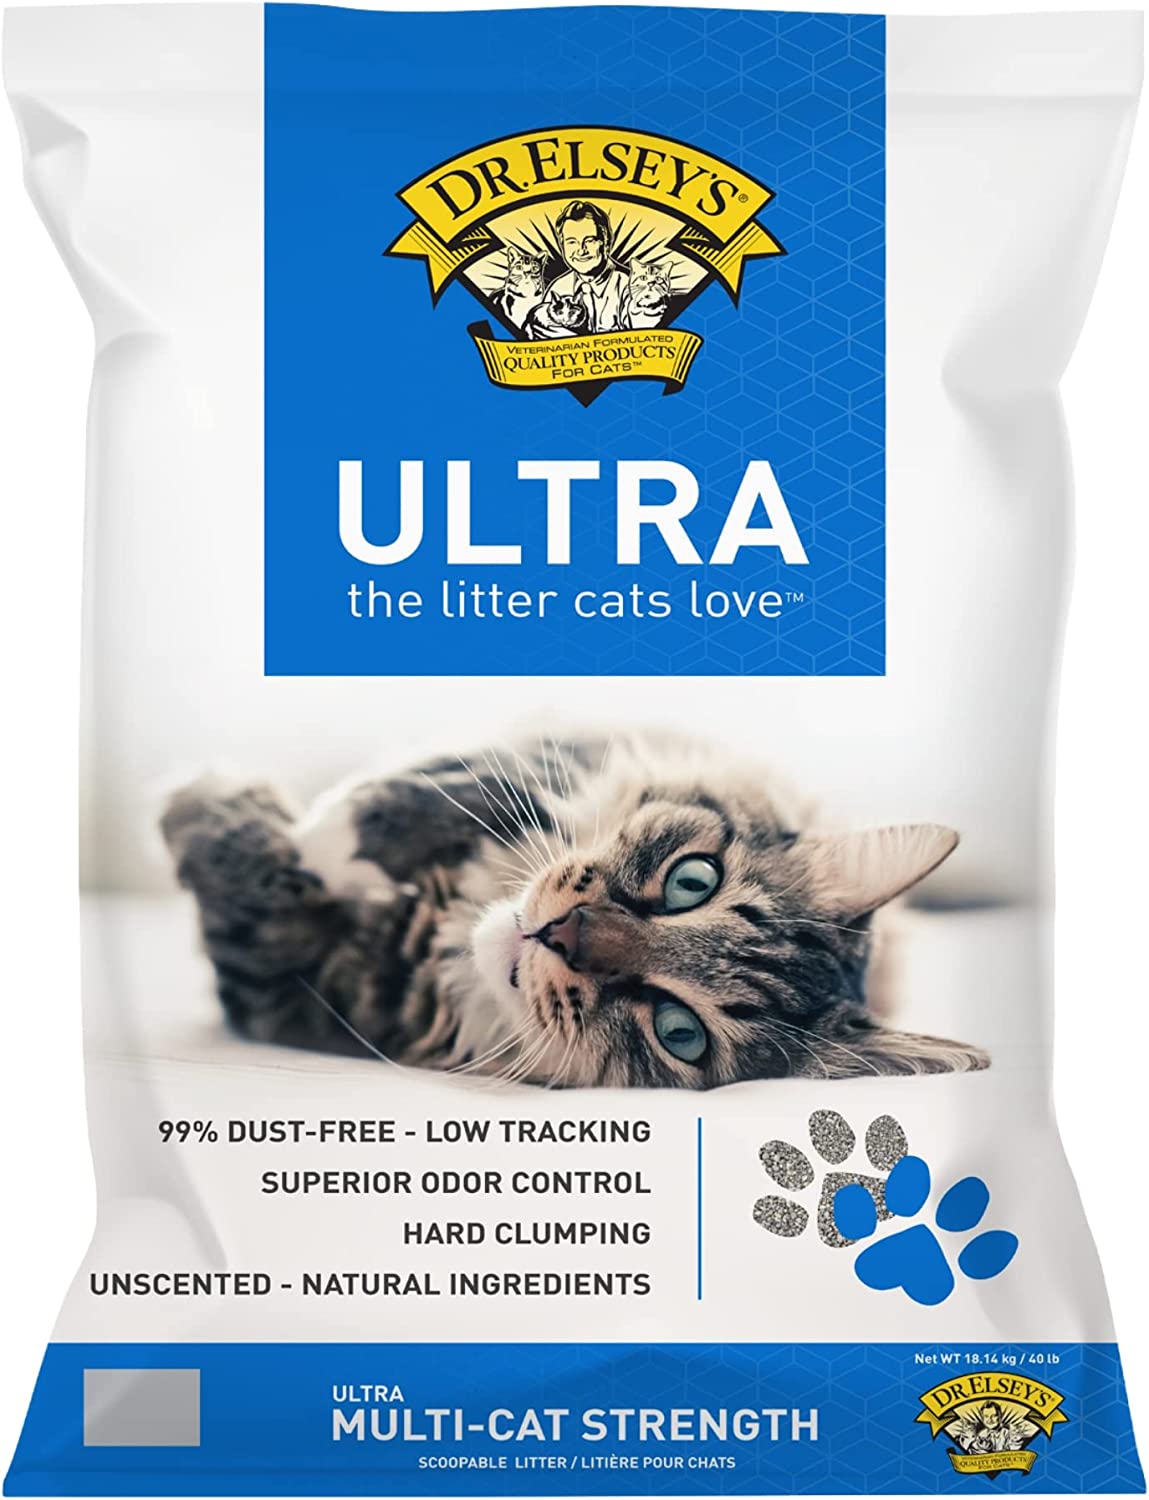 4. Dr. Elsey's Ultra Premium Clumping Cat Litter